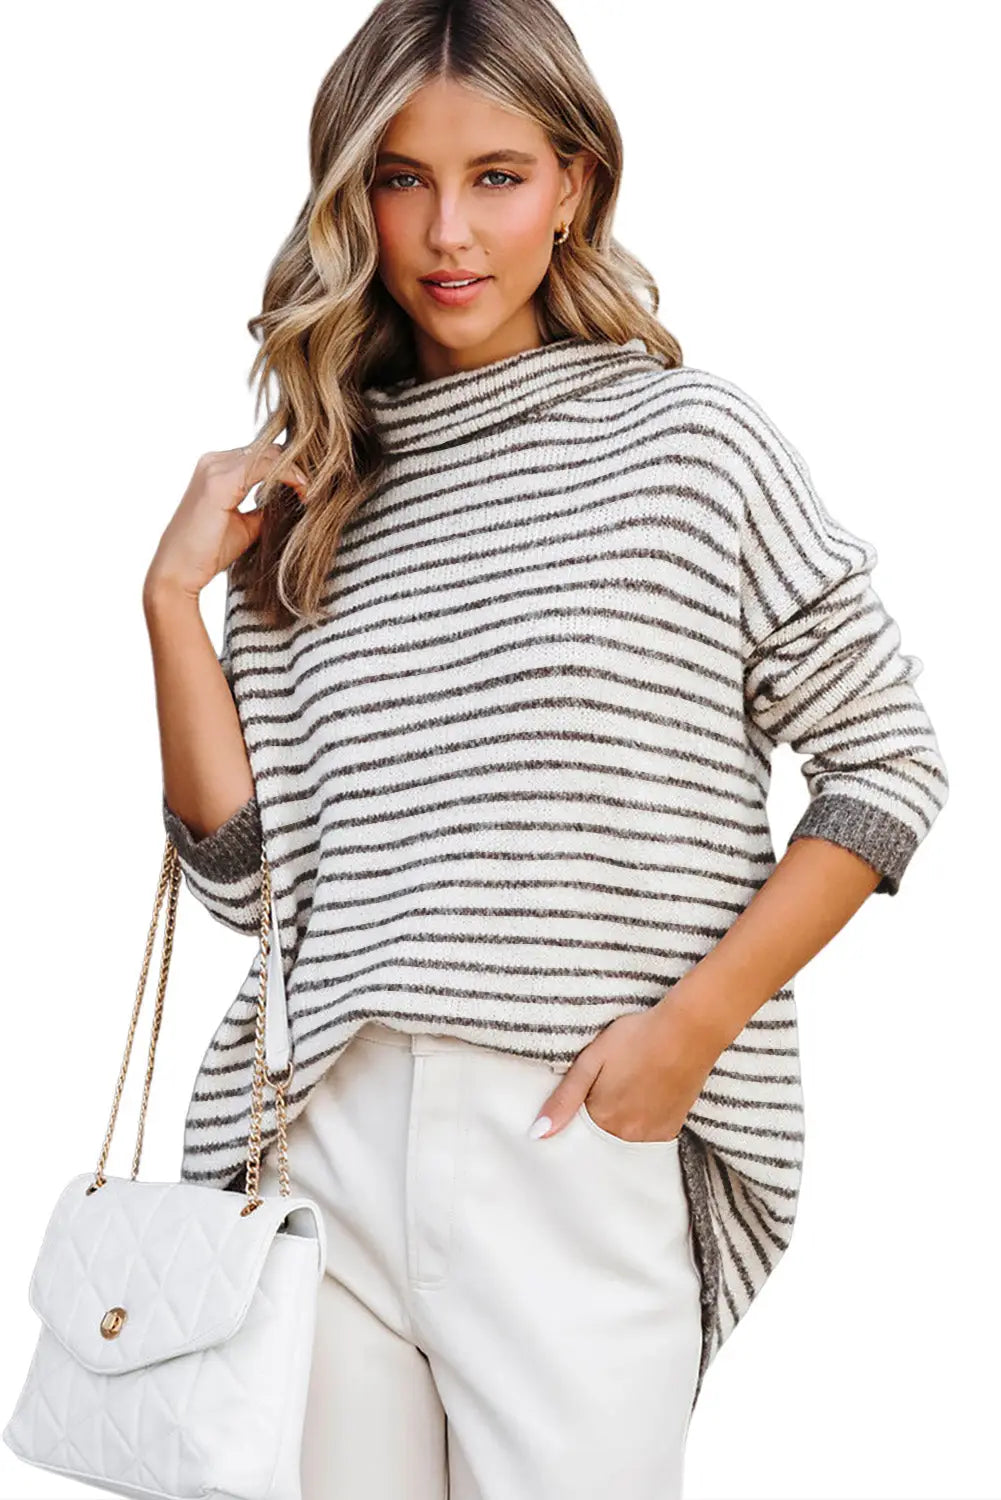 Khaki striped turtleneck loose sweater - sweaters & cardigans